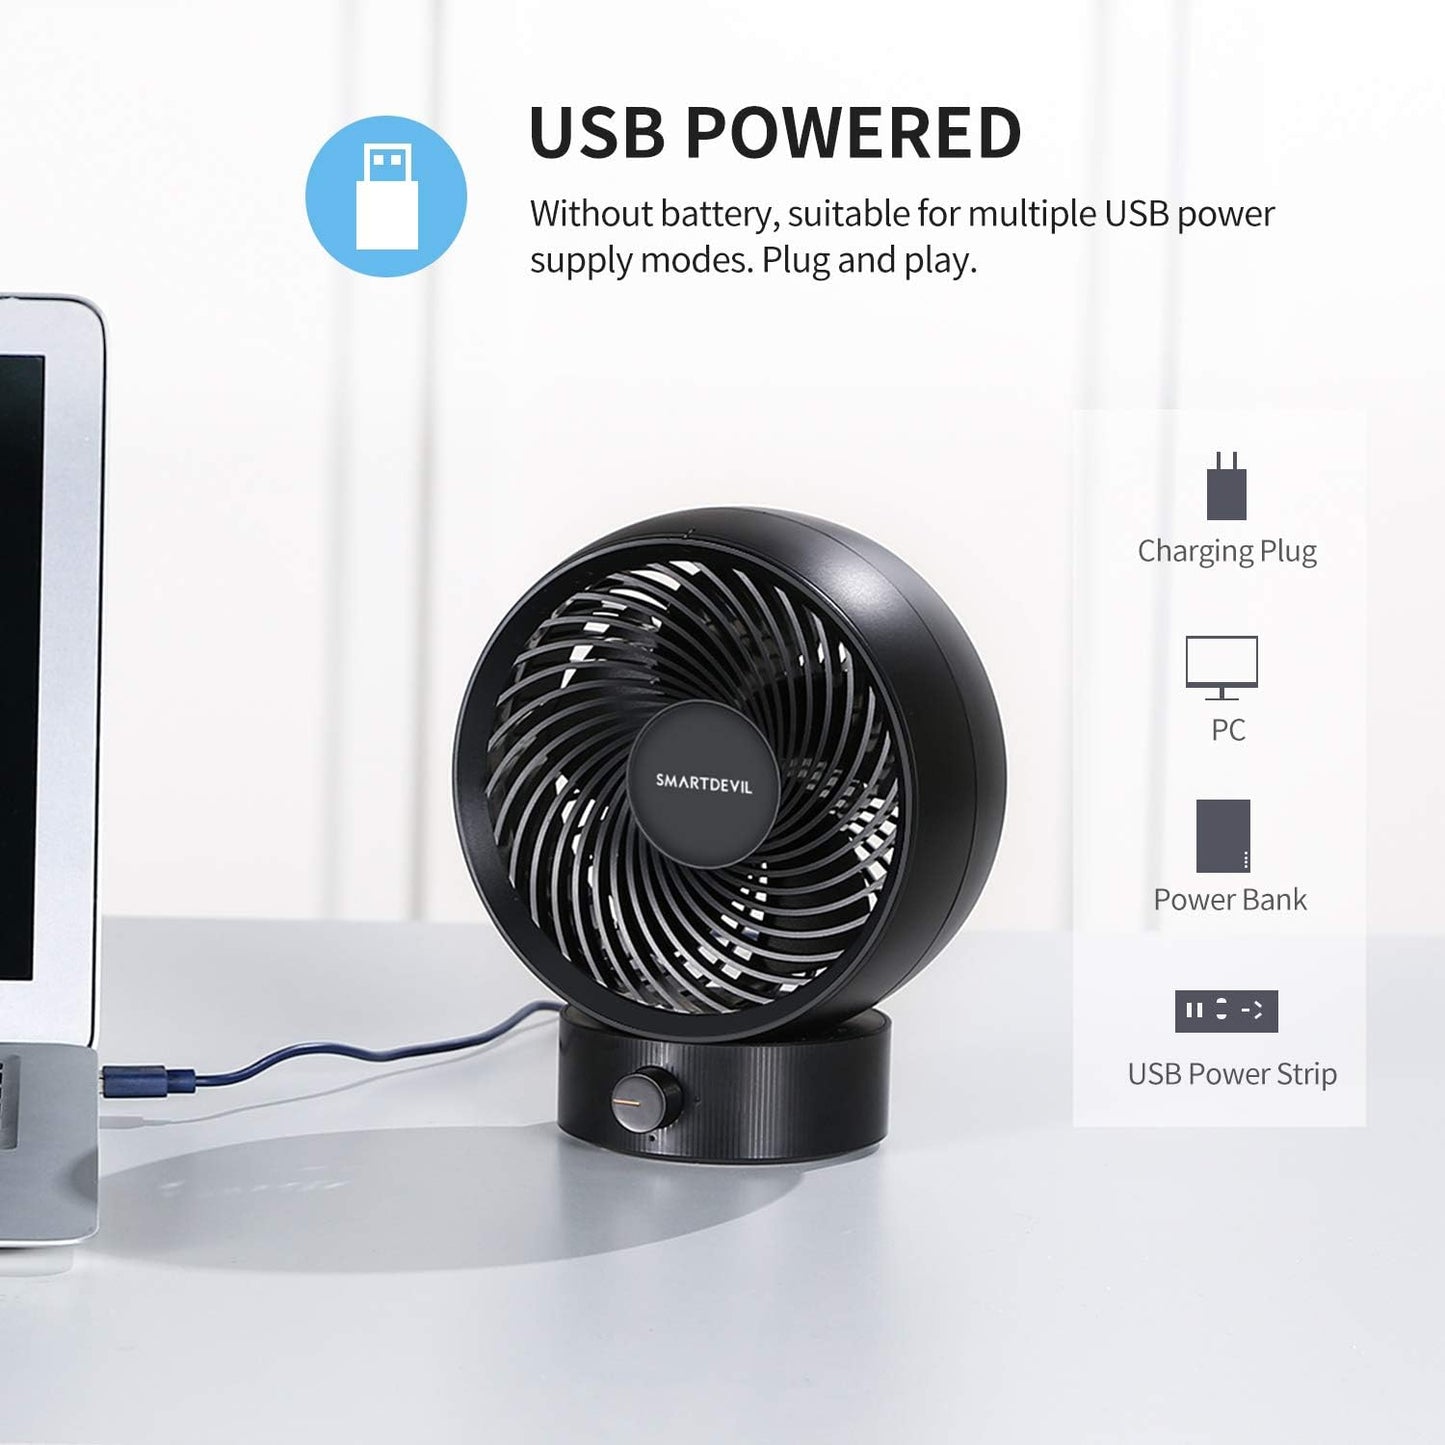 SmartDevil Mini USB Fan, Small Desk Fan with Strong Wind, Quiet Operation Portable Personal Fan for Home Office Bedroom, (Black)